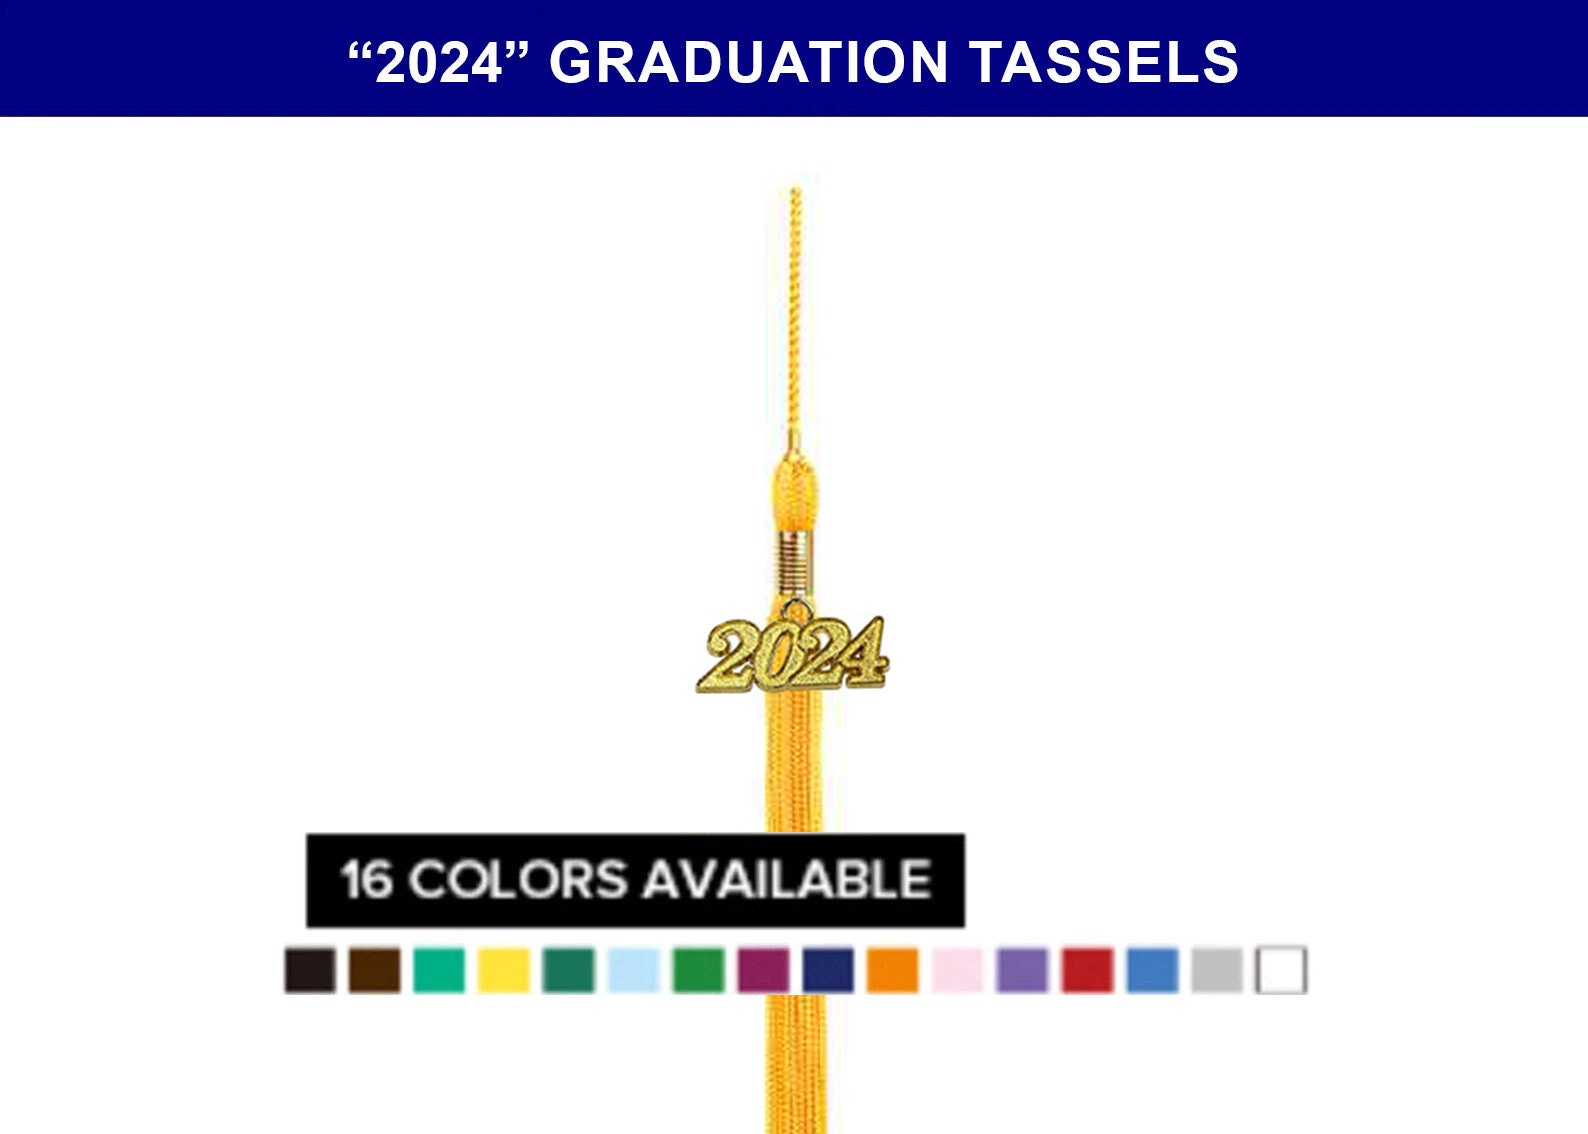 Graduation Tassel 2024, Graduation Cap Tassel 2024 Tassels for Graduation  Cap 2024 Graduation Hat Decoration Tassel with The 2024 Year Gold Charm  Blue